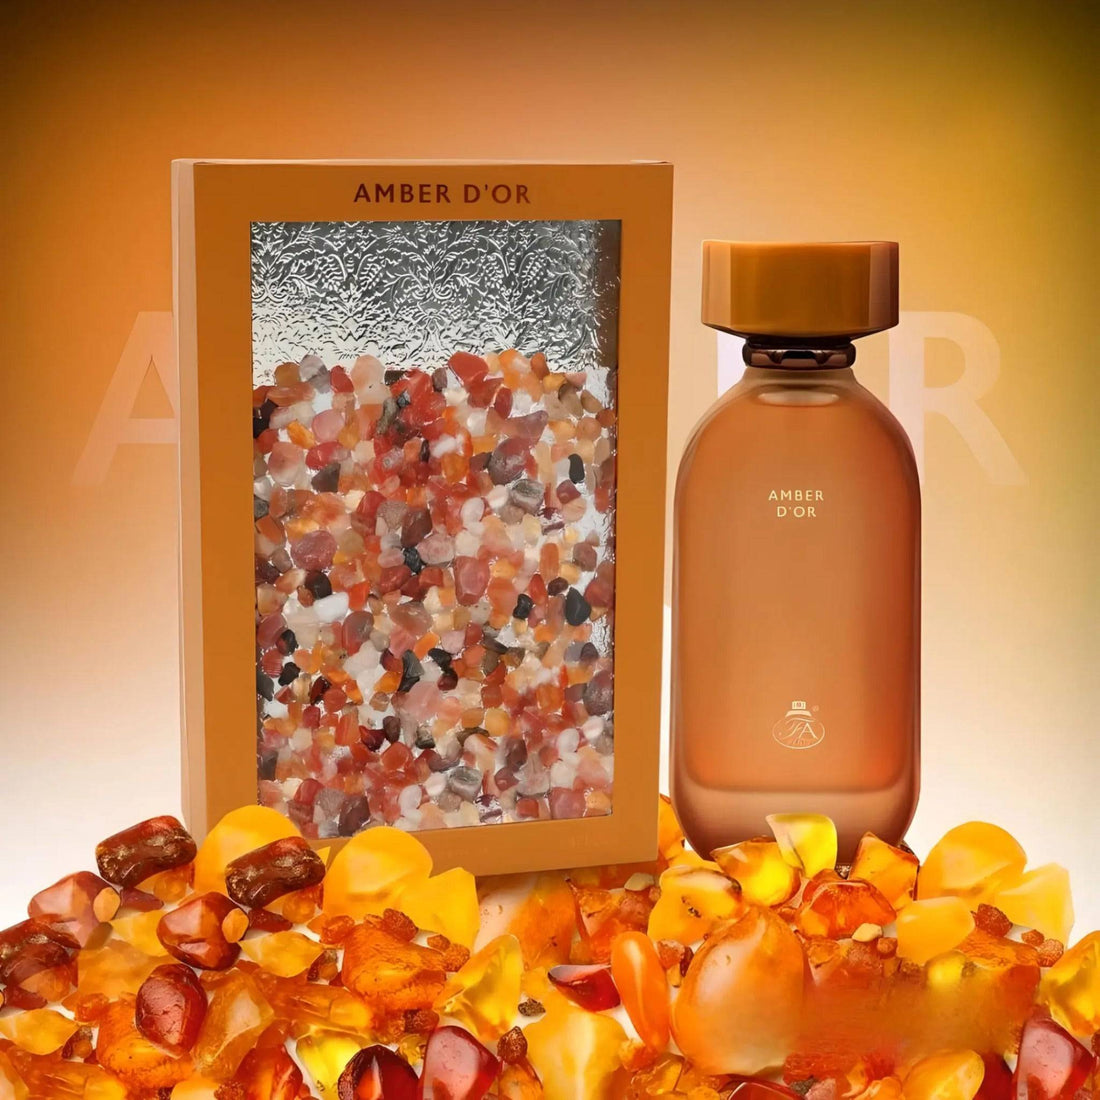 Elegant 100ml bottle of Amber D’or Eau De Parfum by FA Paris, showcasing its luxurious and sophisticated fragrance.